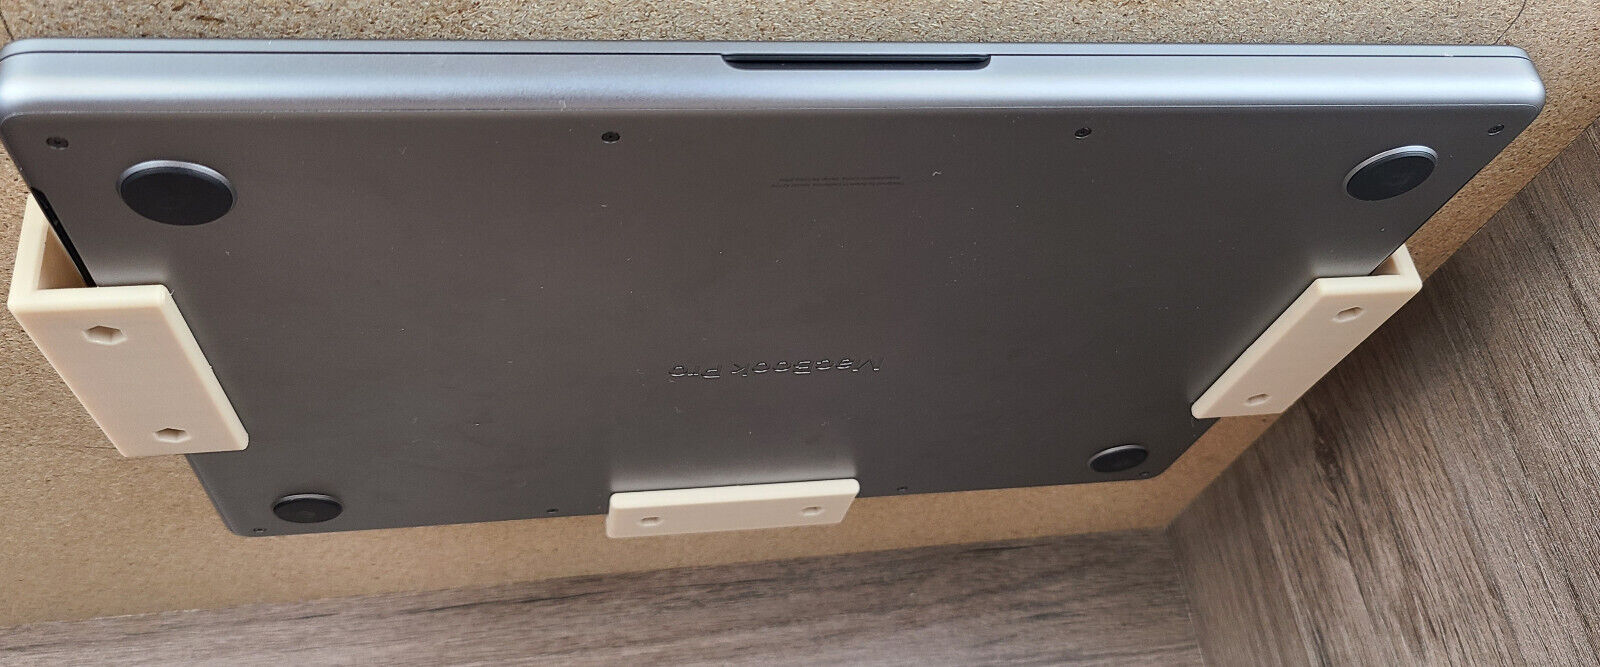 Laptop and/or Power Brick - Under Desk Mount (Holder Shelf Rack Storage Bracket)